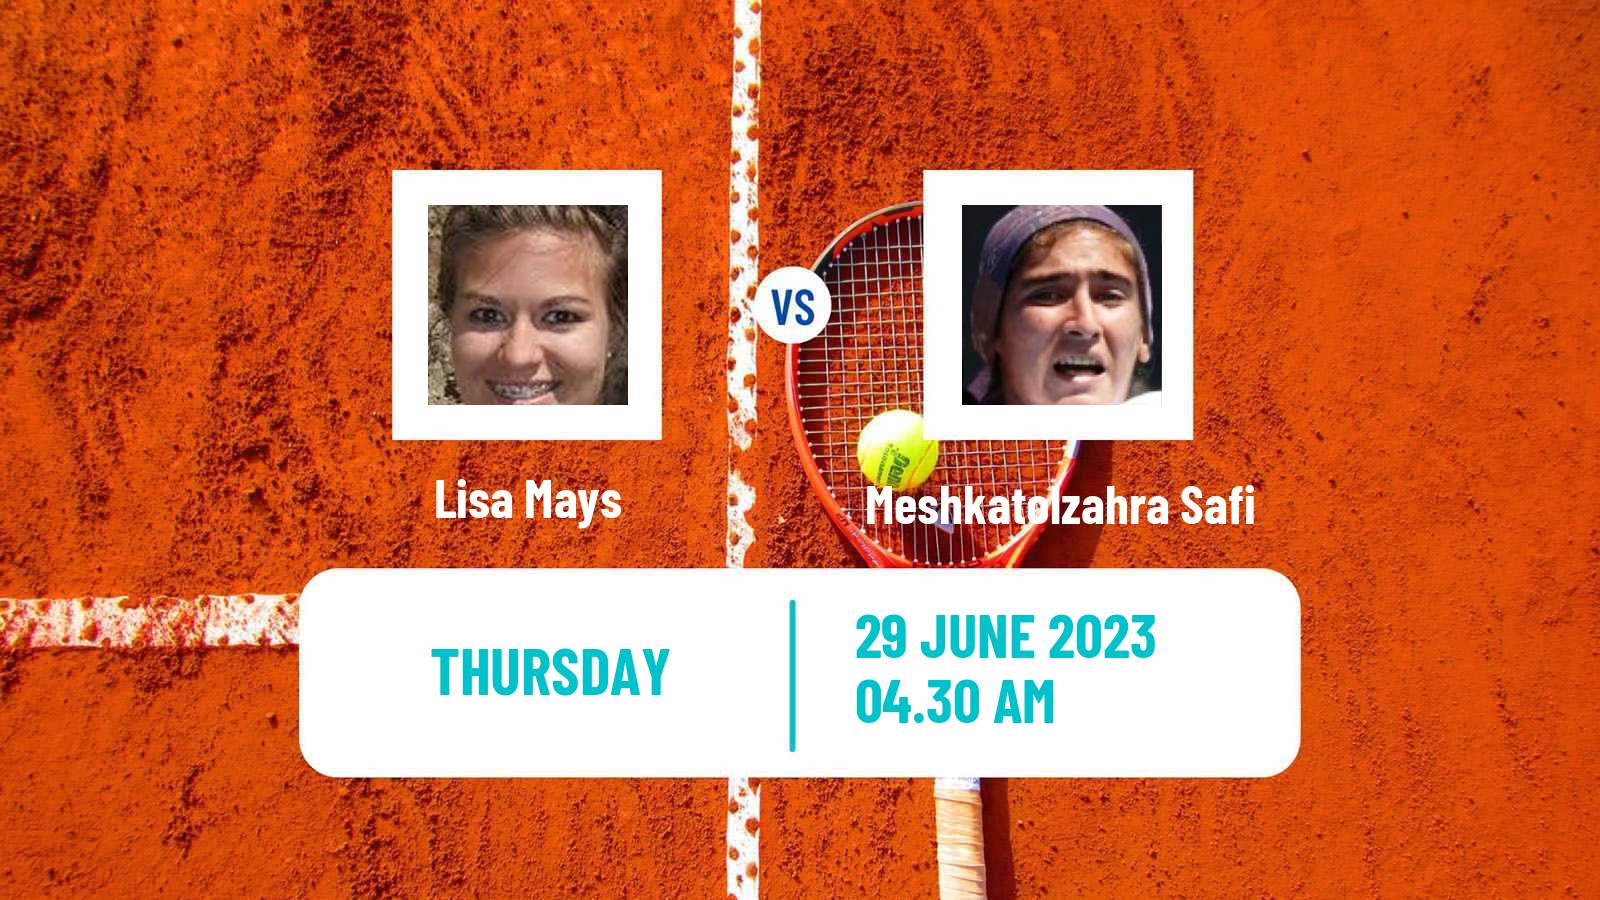 Tennis ITF W15 Monastir 21 Women Lisa Mays - Meshkatolzahra Safi